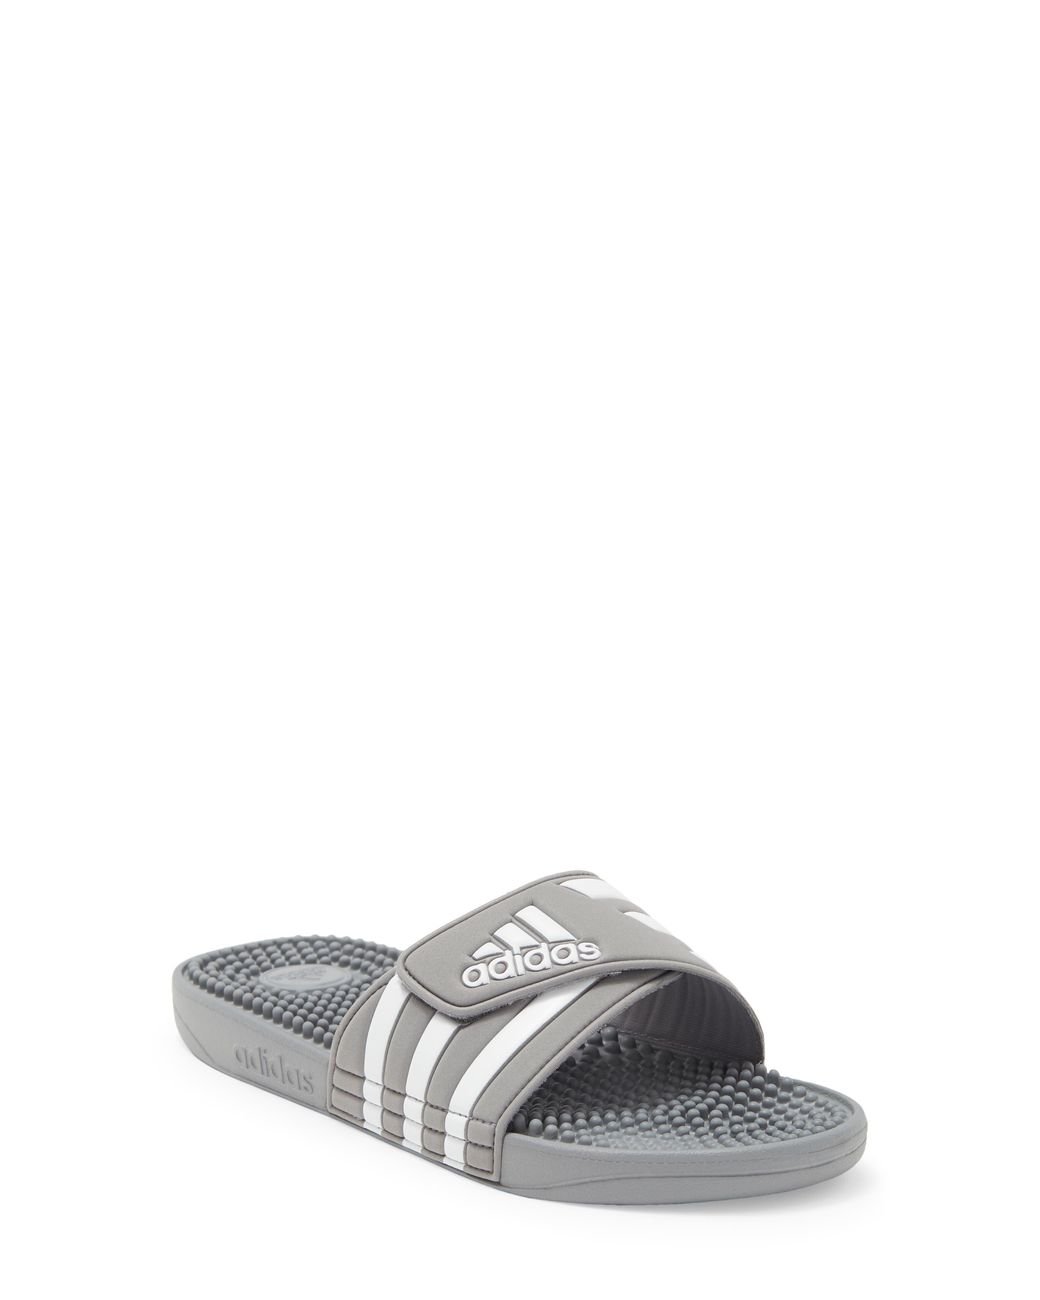 adidas Adissage Slide Sandal in Gray | Lyst